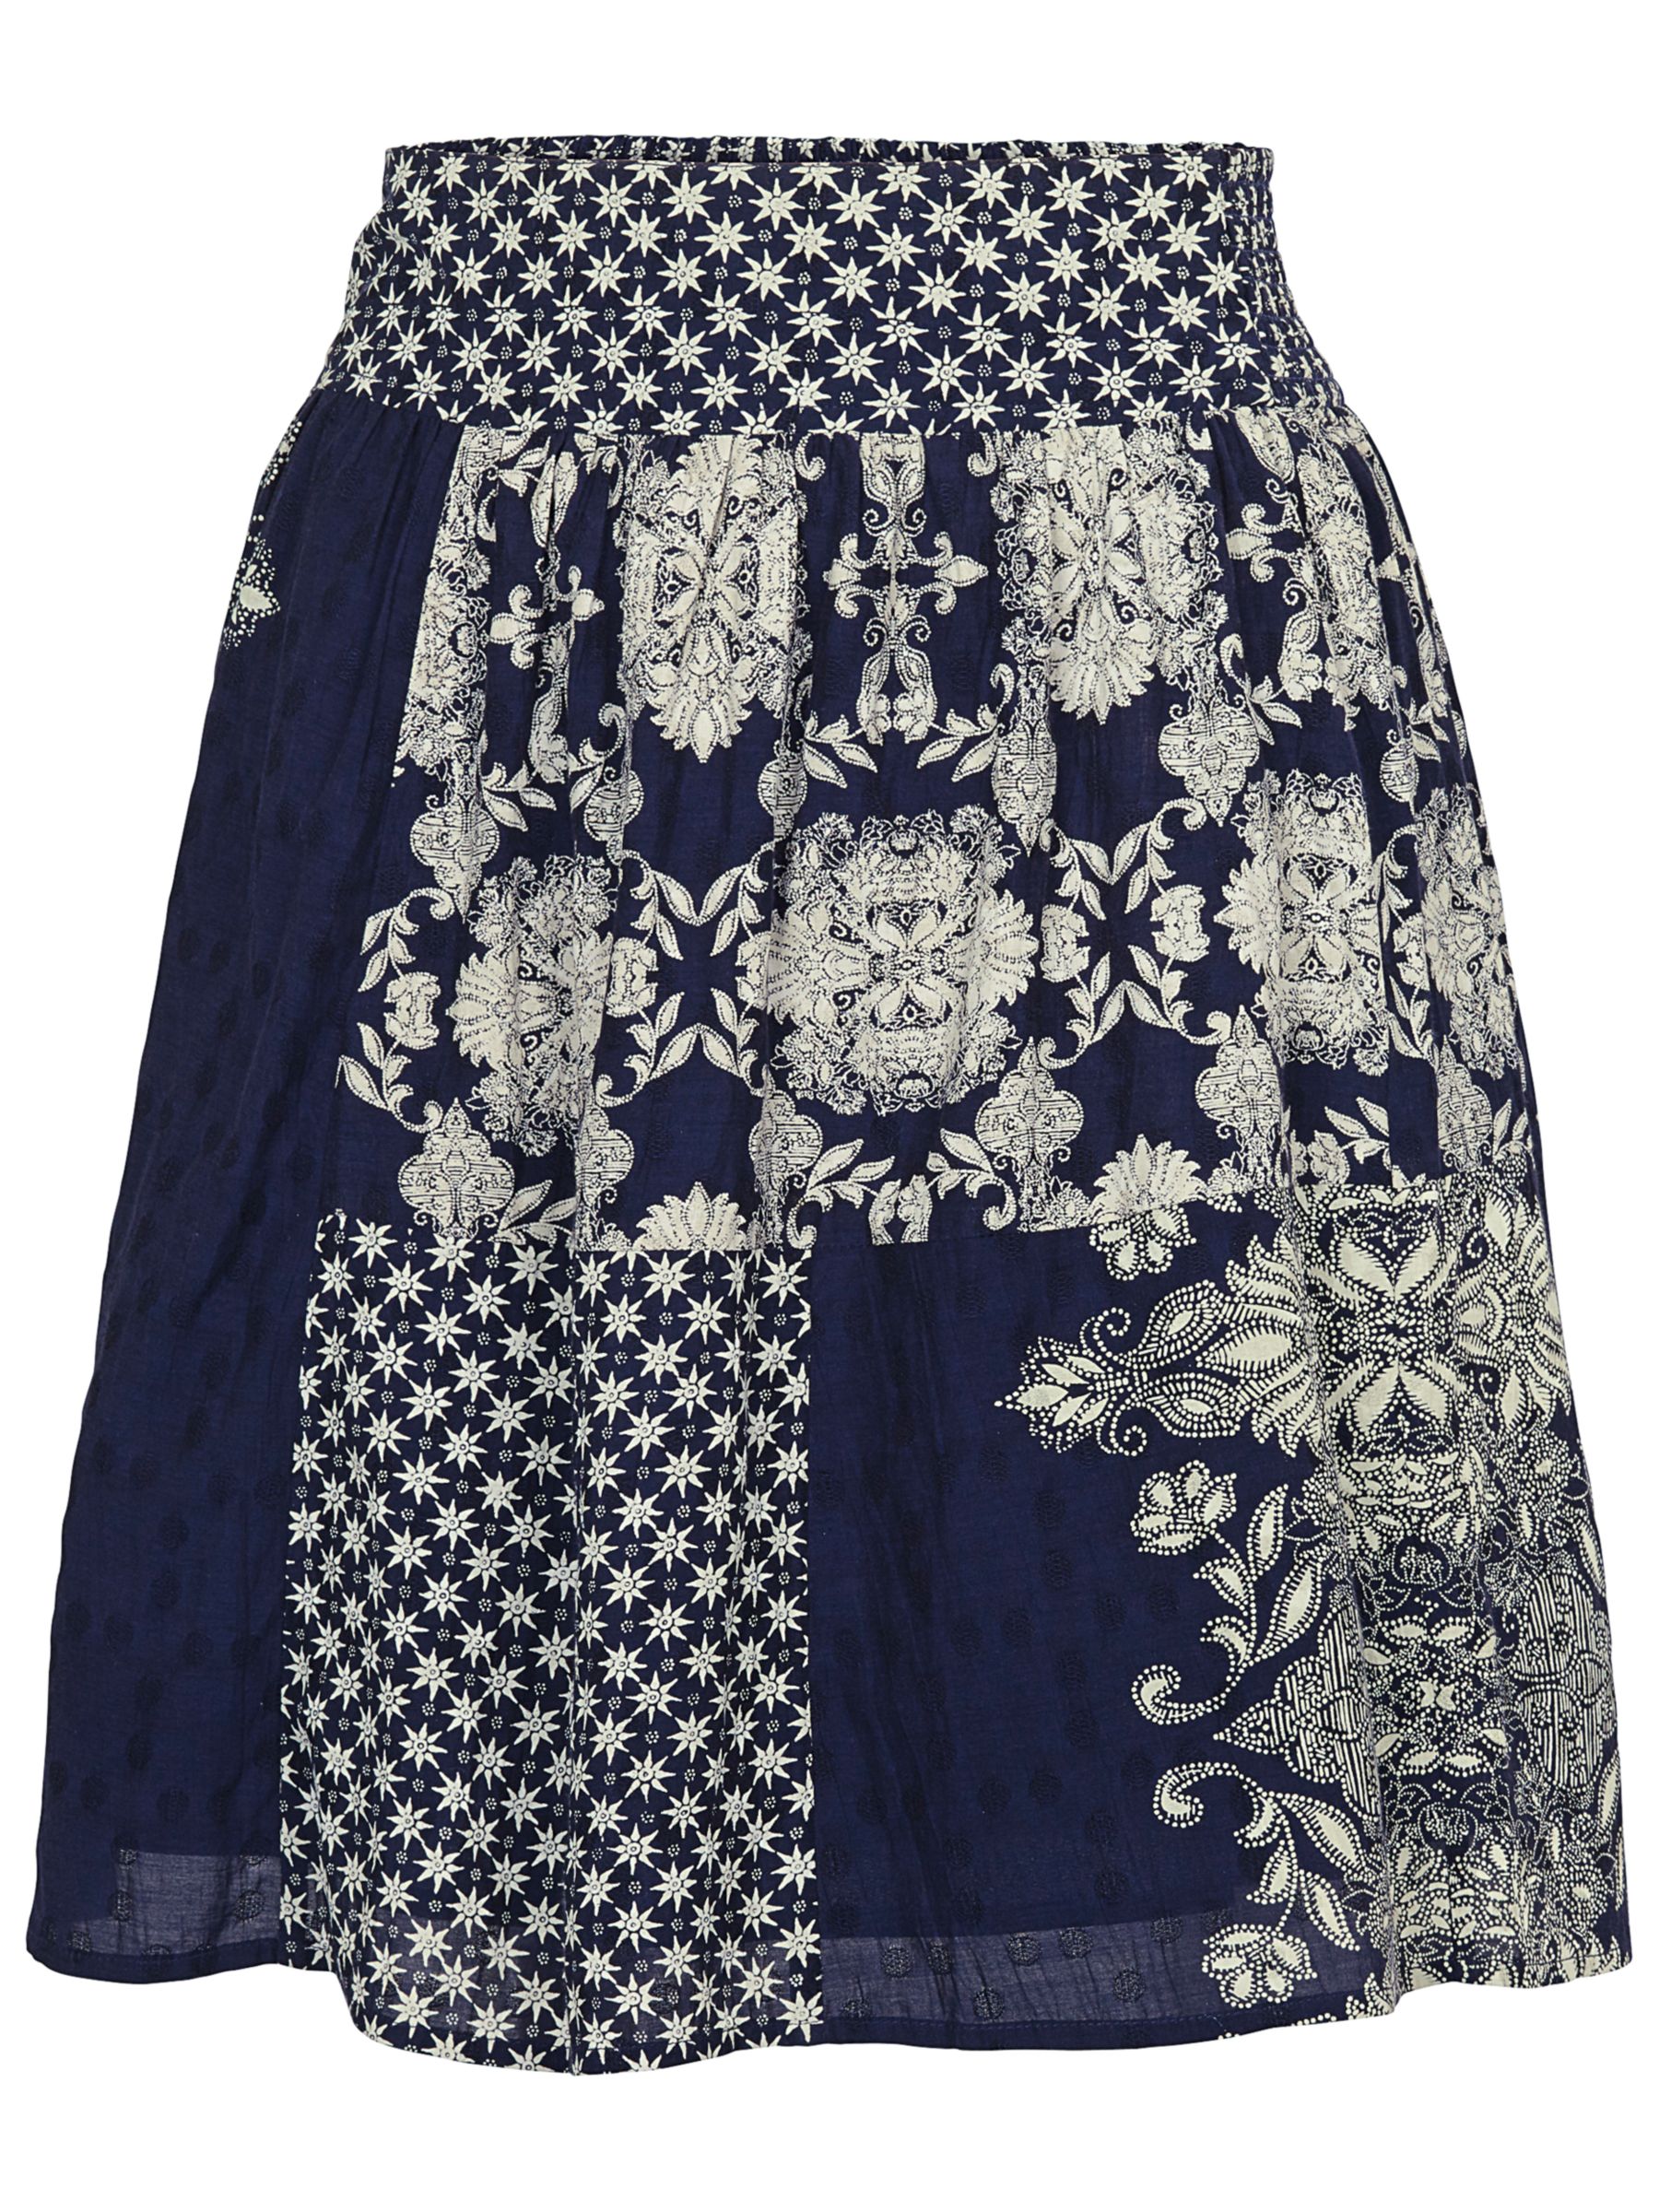 Fat Face Dotty Floral Patchwork Skirt, Indigo at John Lewis & Partners